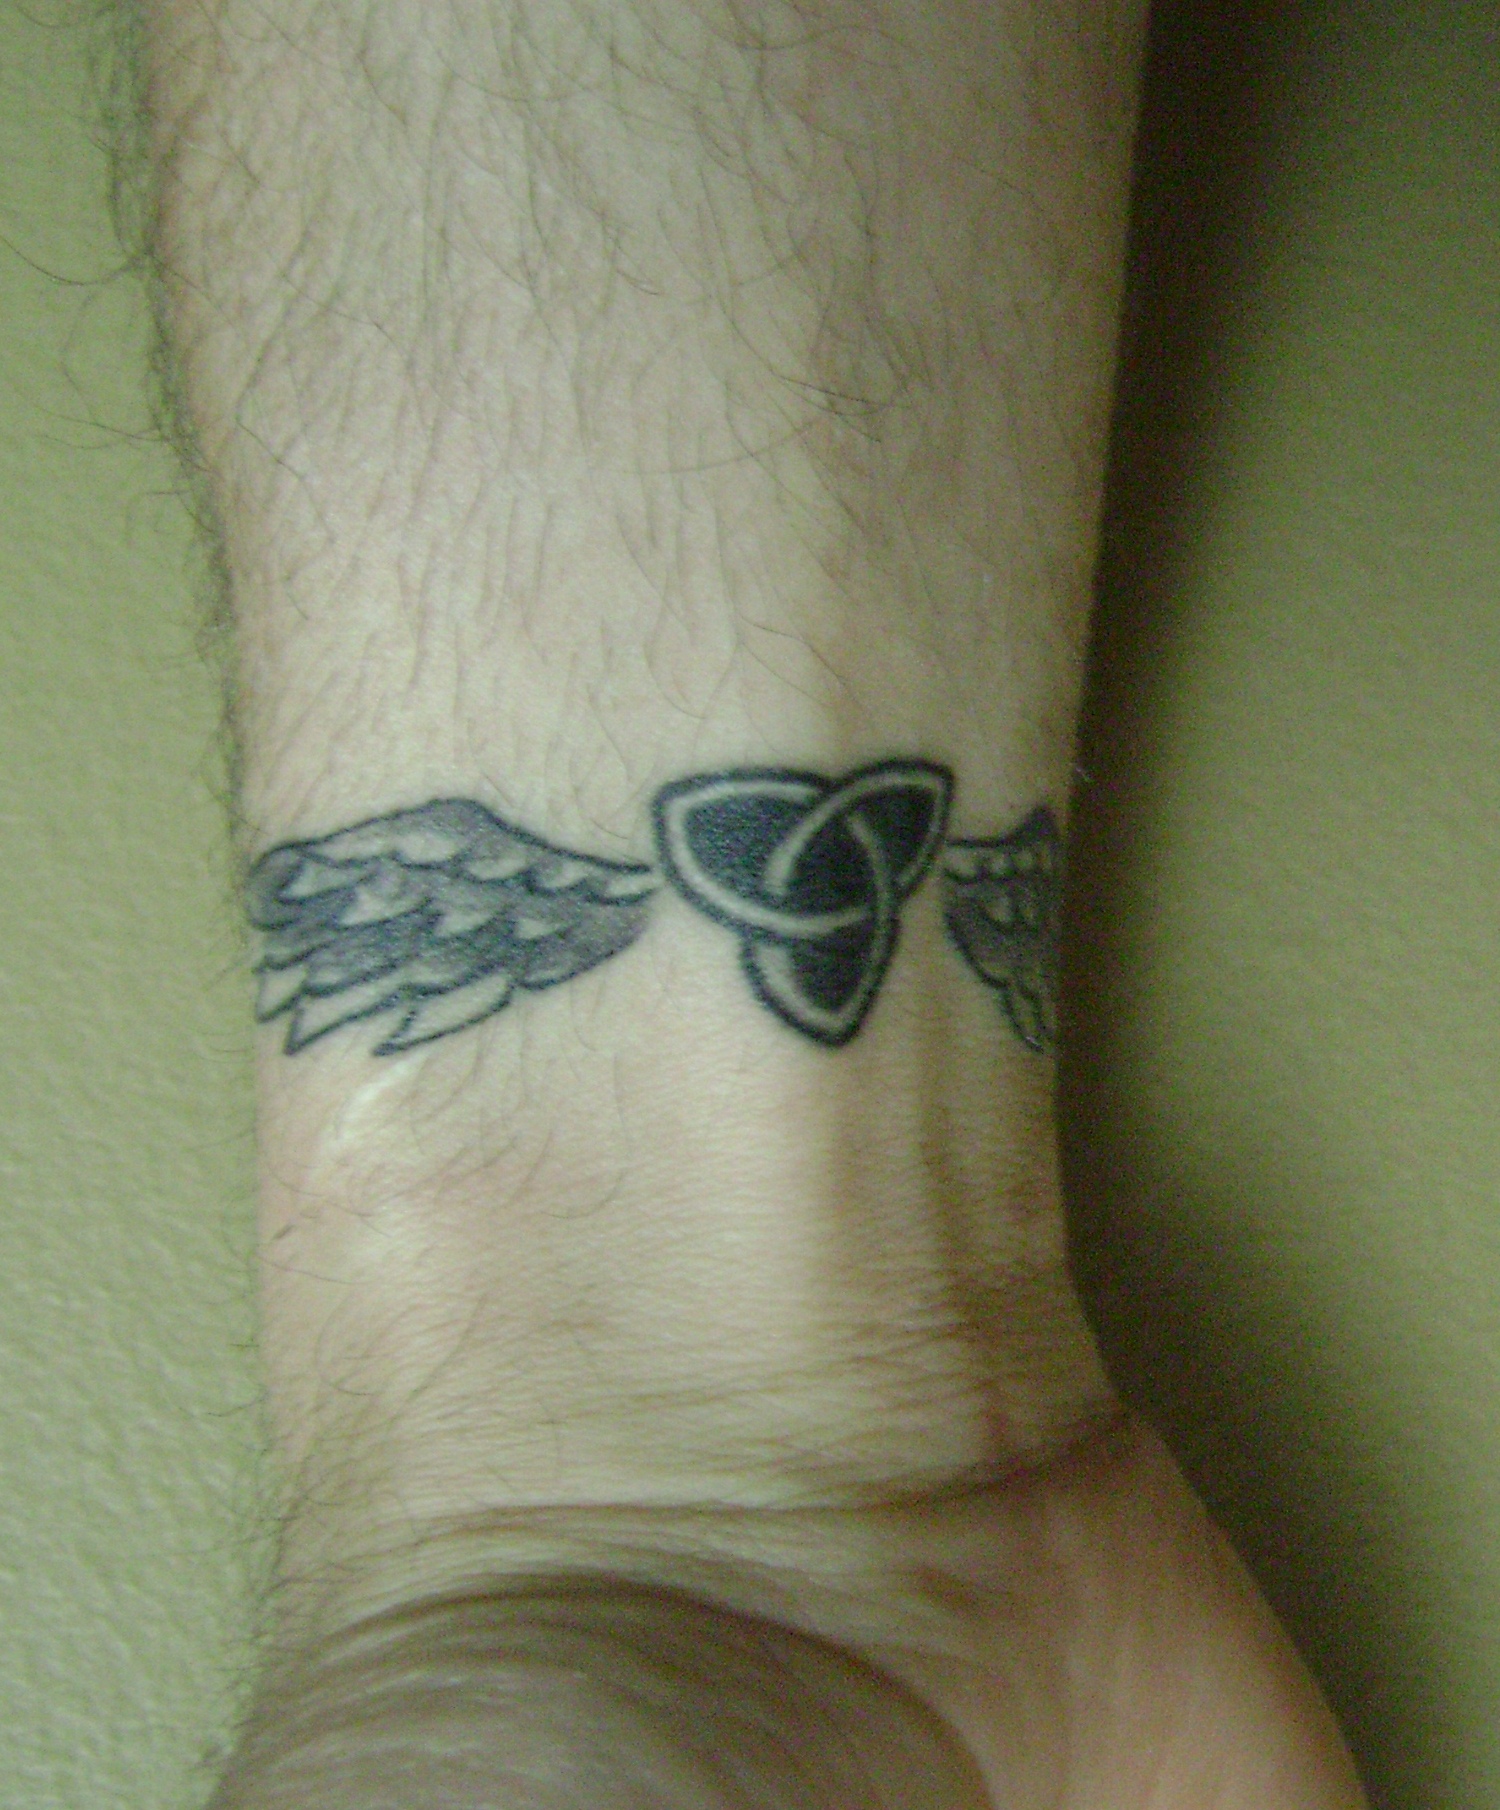 Small-Wrist-Tattoo-Designs-For-Men